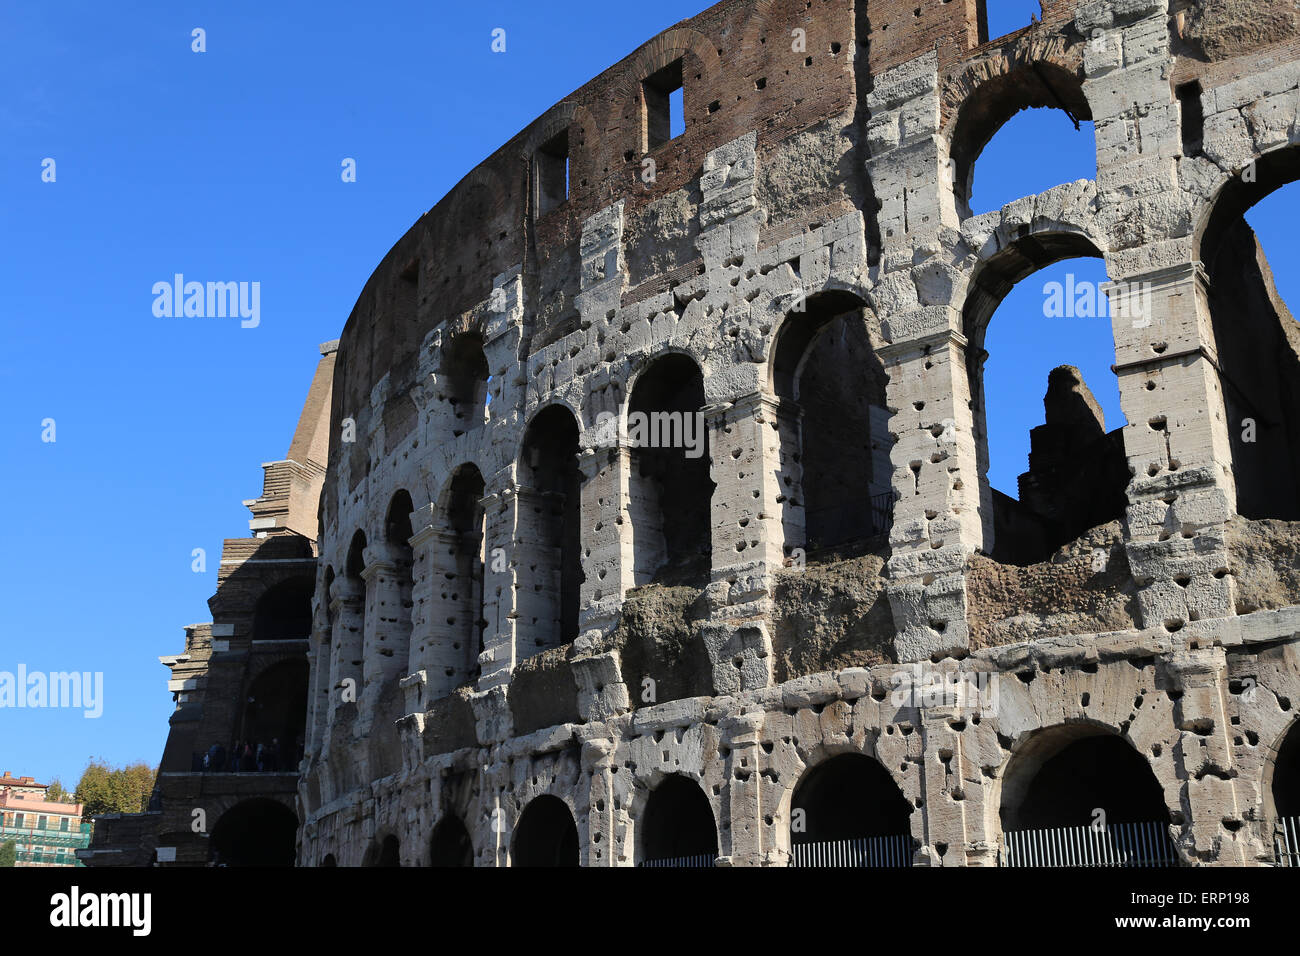 Italy. Rome. The Colosseum (Coliseum) or Flavian Amphitheatre. Stock Photo